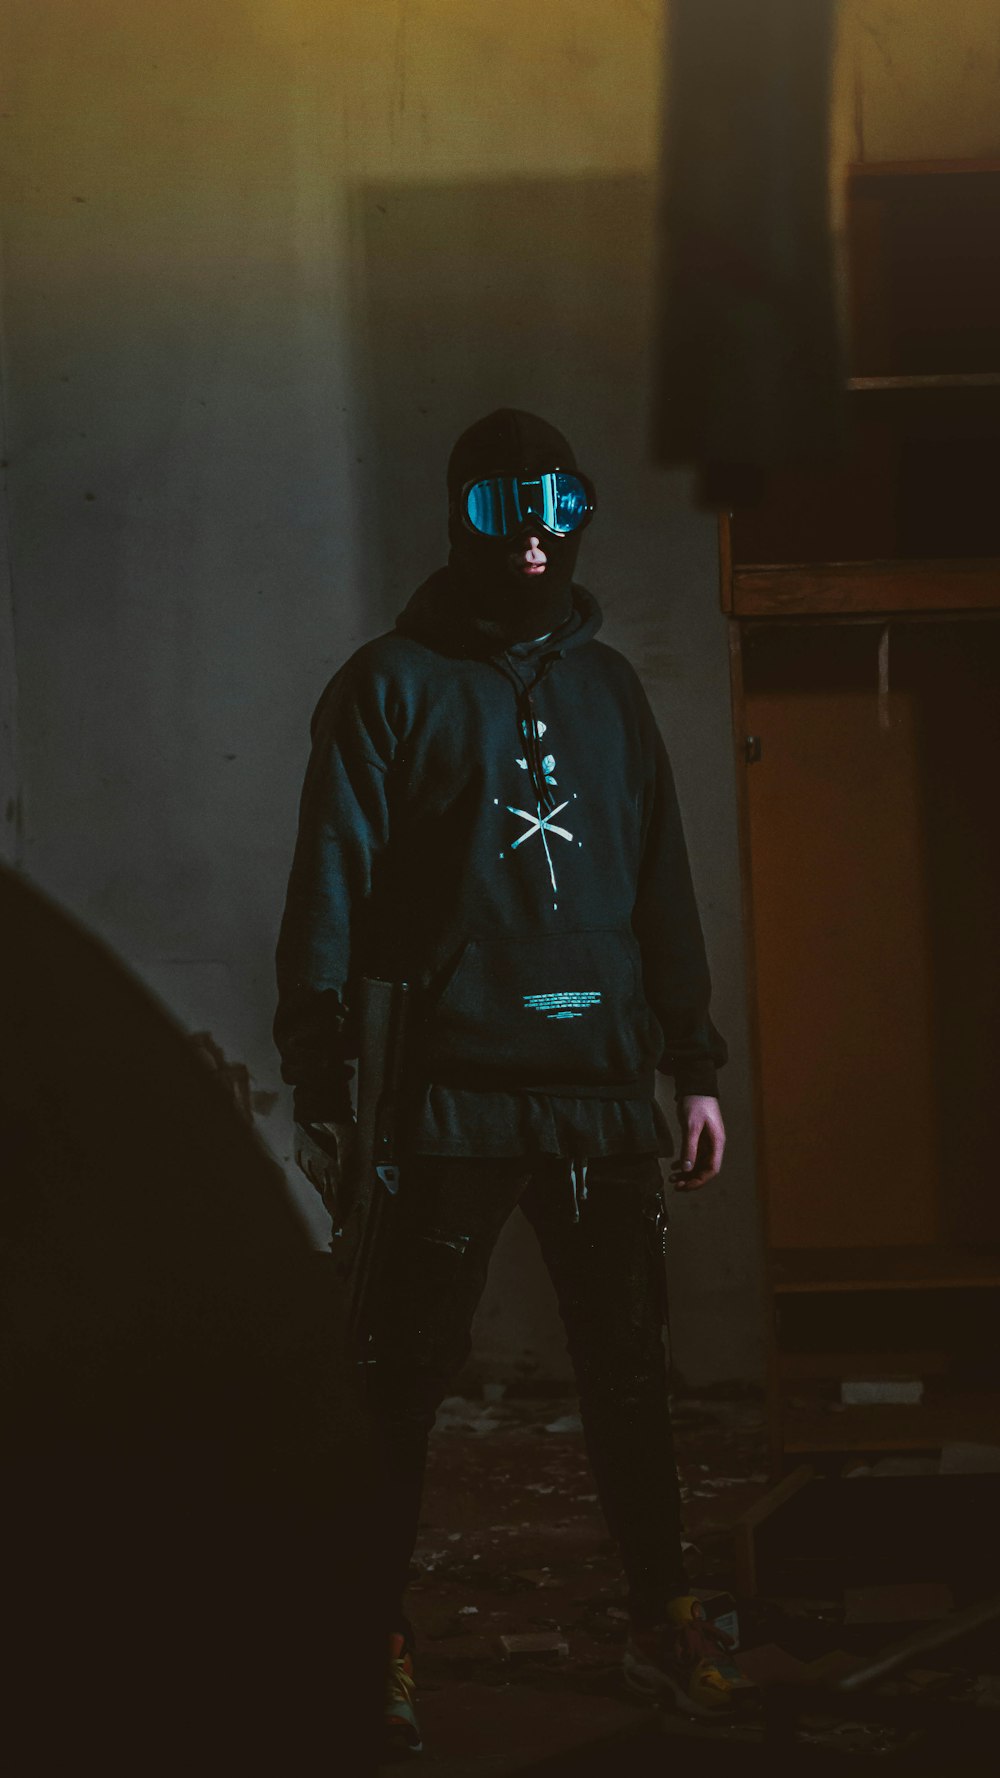 man wearing black jacket holding assault rifle